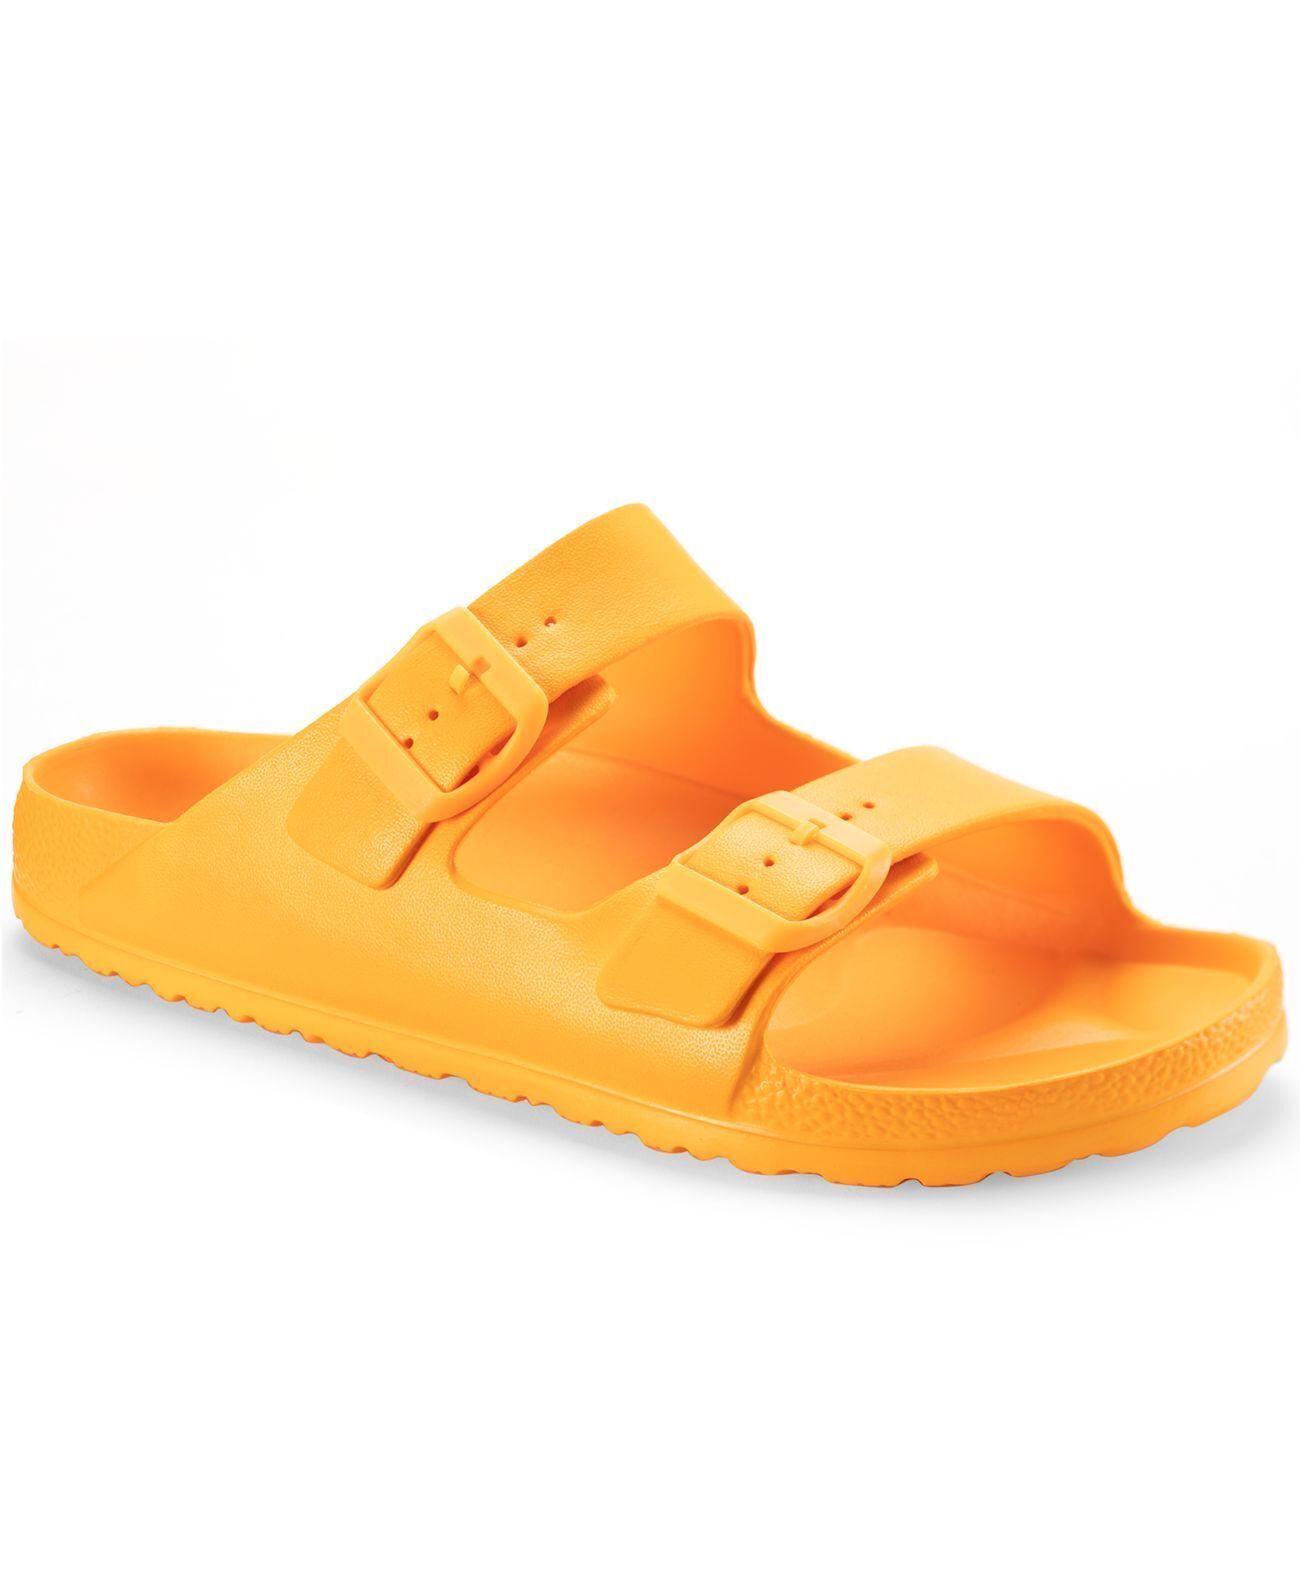 Primary image for Sun + Stone Mens Jude Slip-On Sandals,Orange,8 M